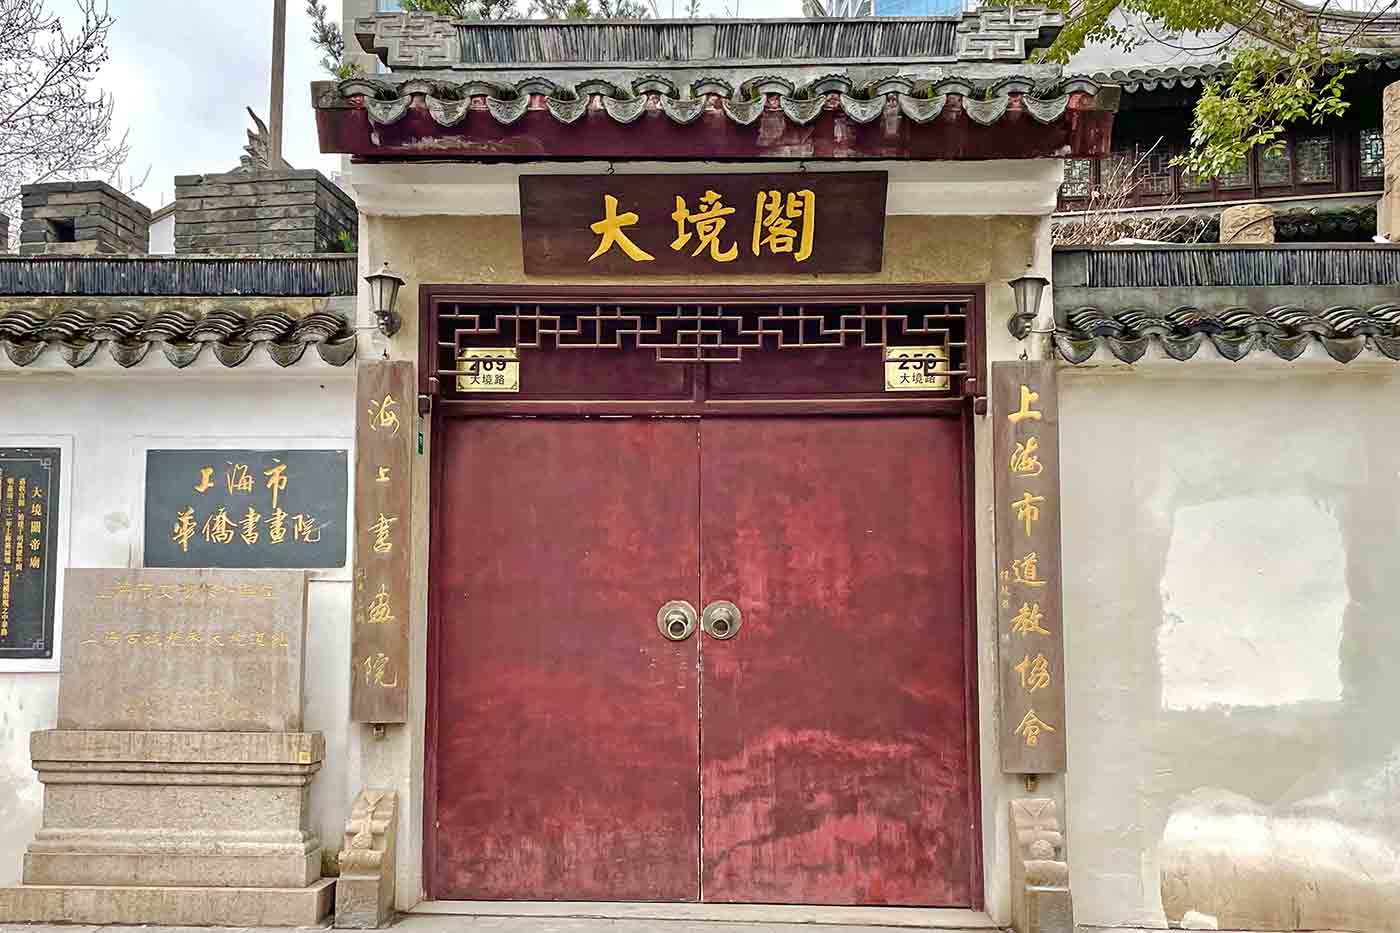 Shanghai Old City Wall and Dajing Ge Pavilion